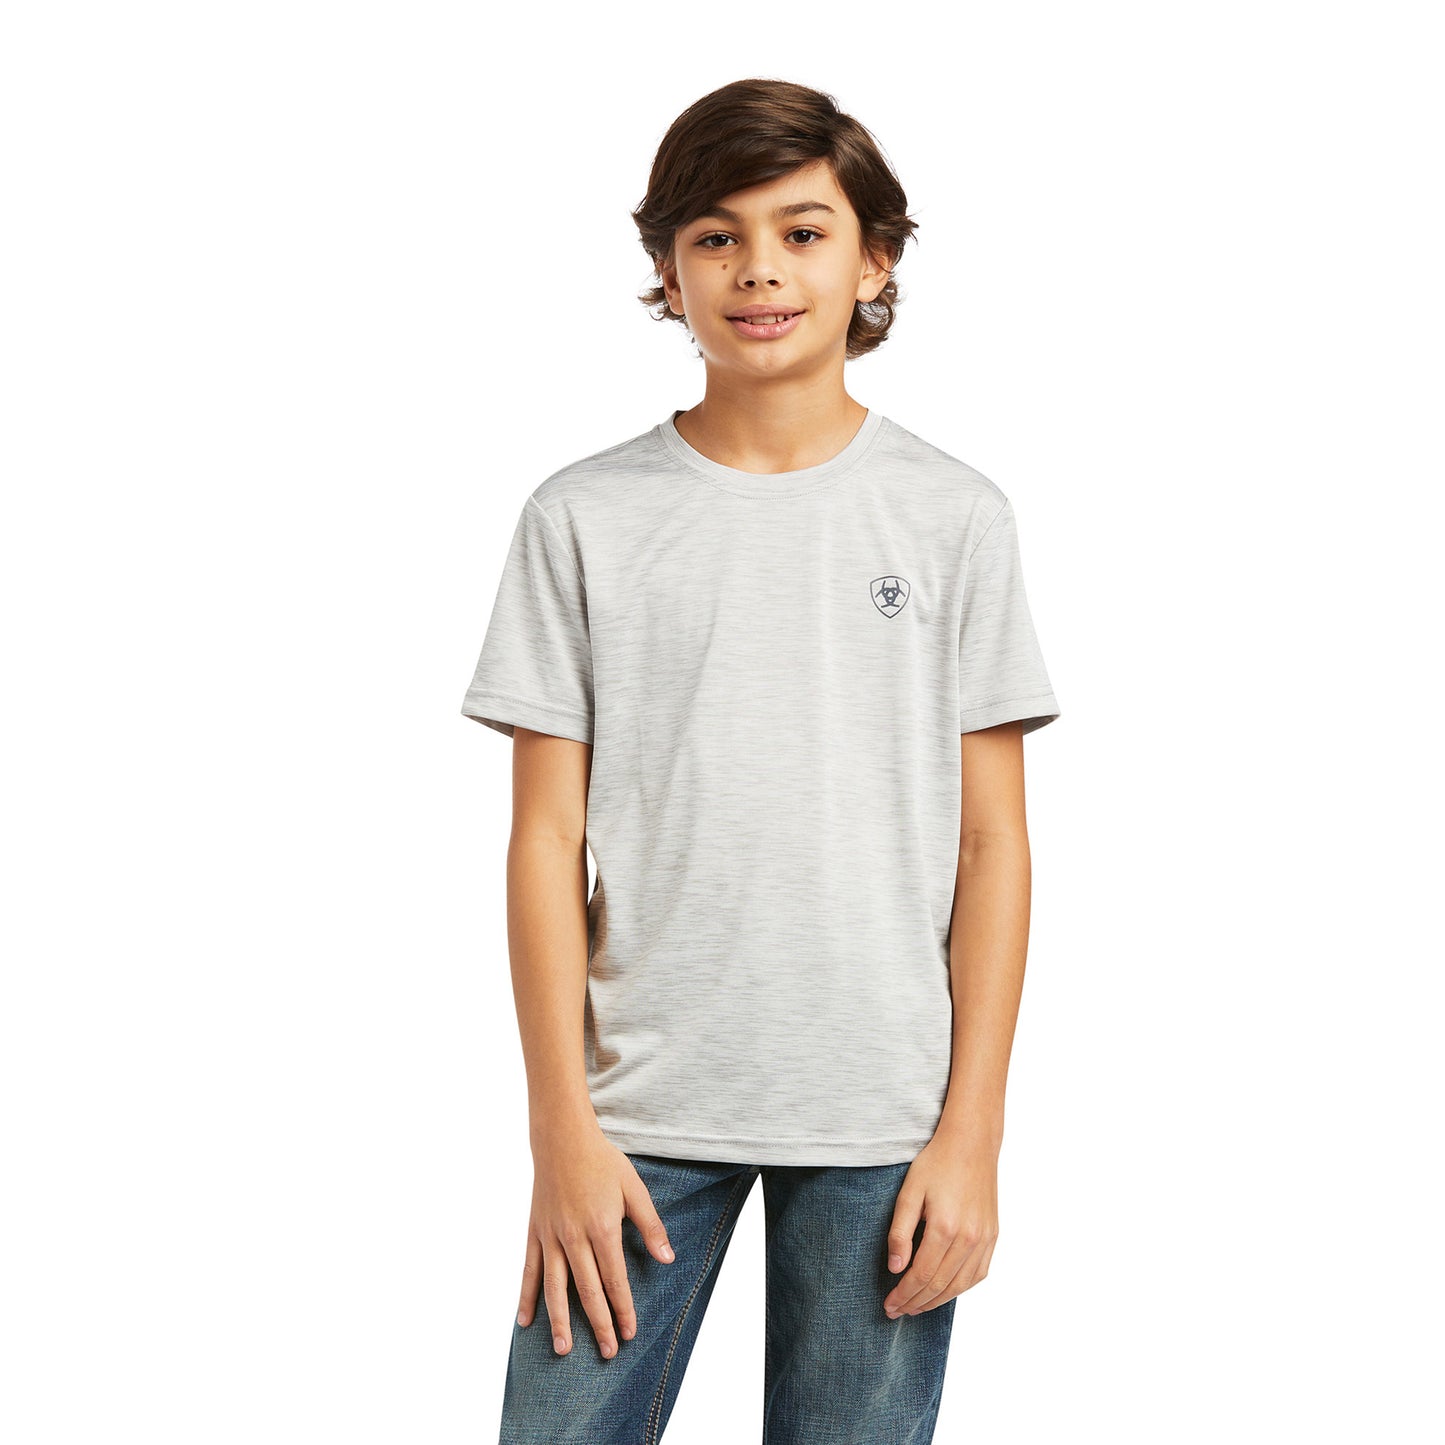 Ariat Boy's Charger Shield Short Sleeve Echo Grey T-Shirt 10039585